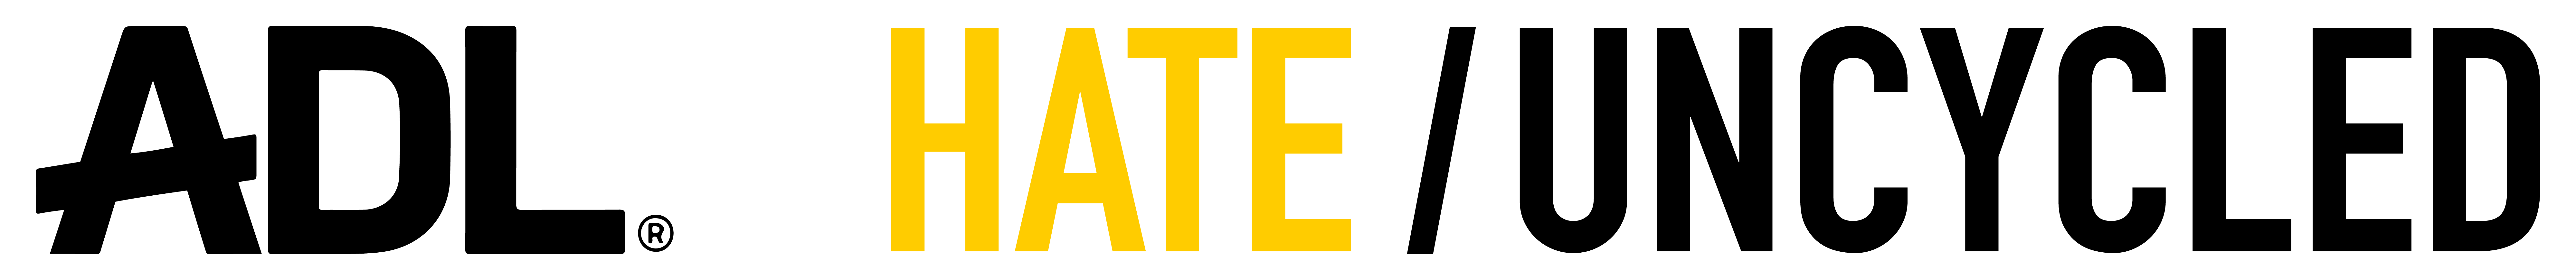 Anti-Defamation League Hate Uncycled logo